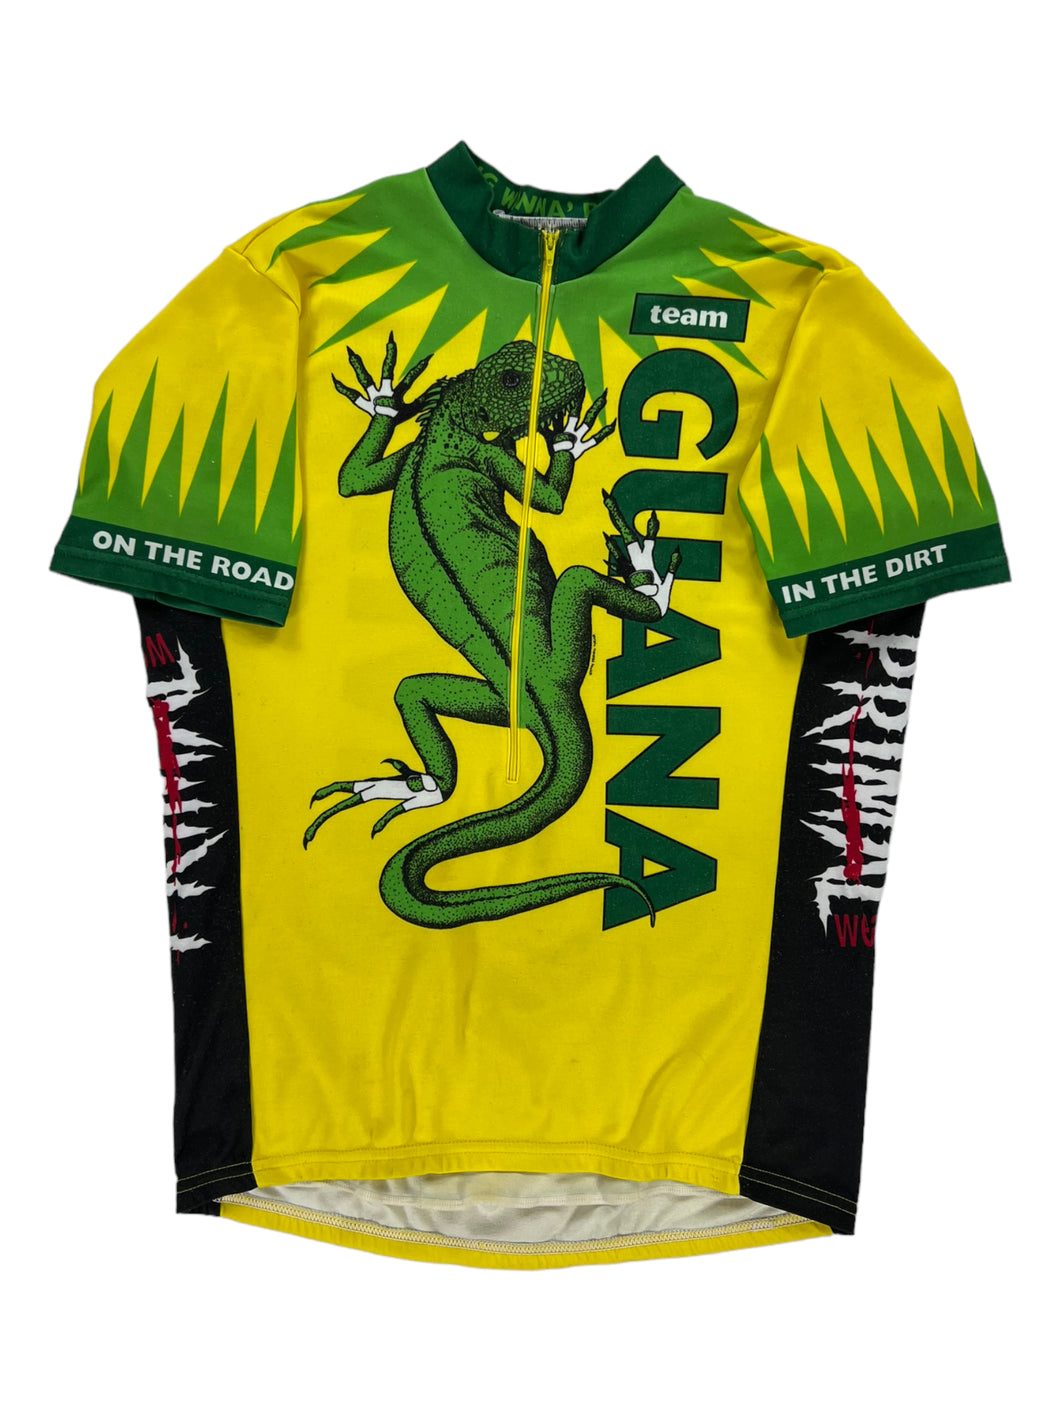 Vintage 90s Primal Wear Team Iguana cycling jersey (L)